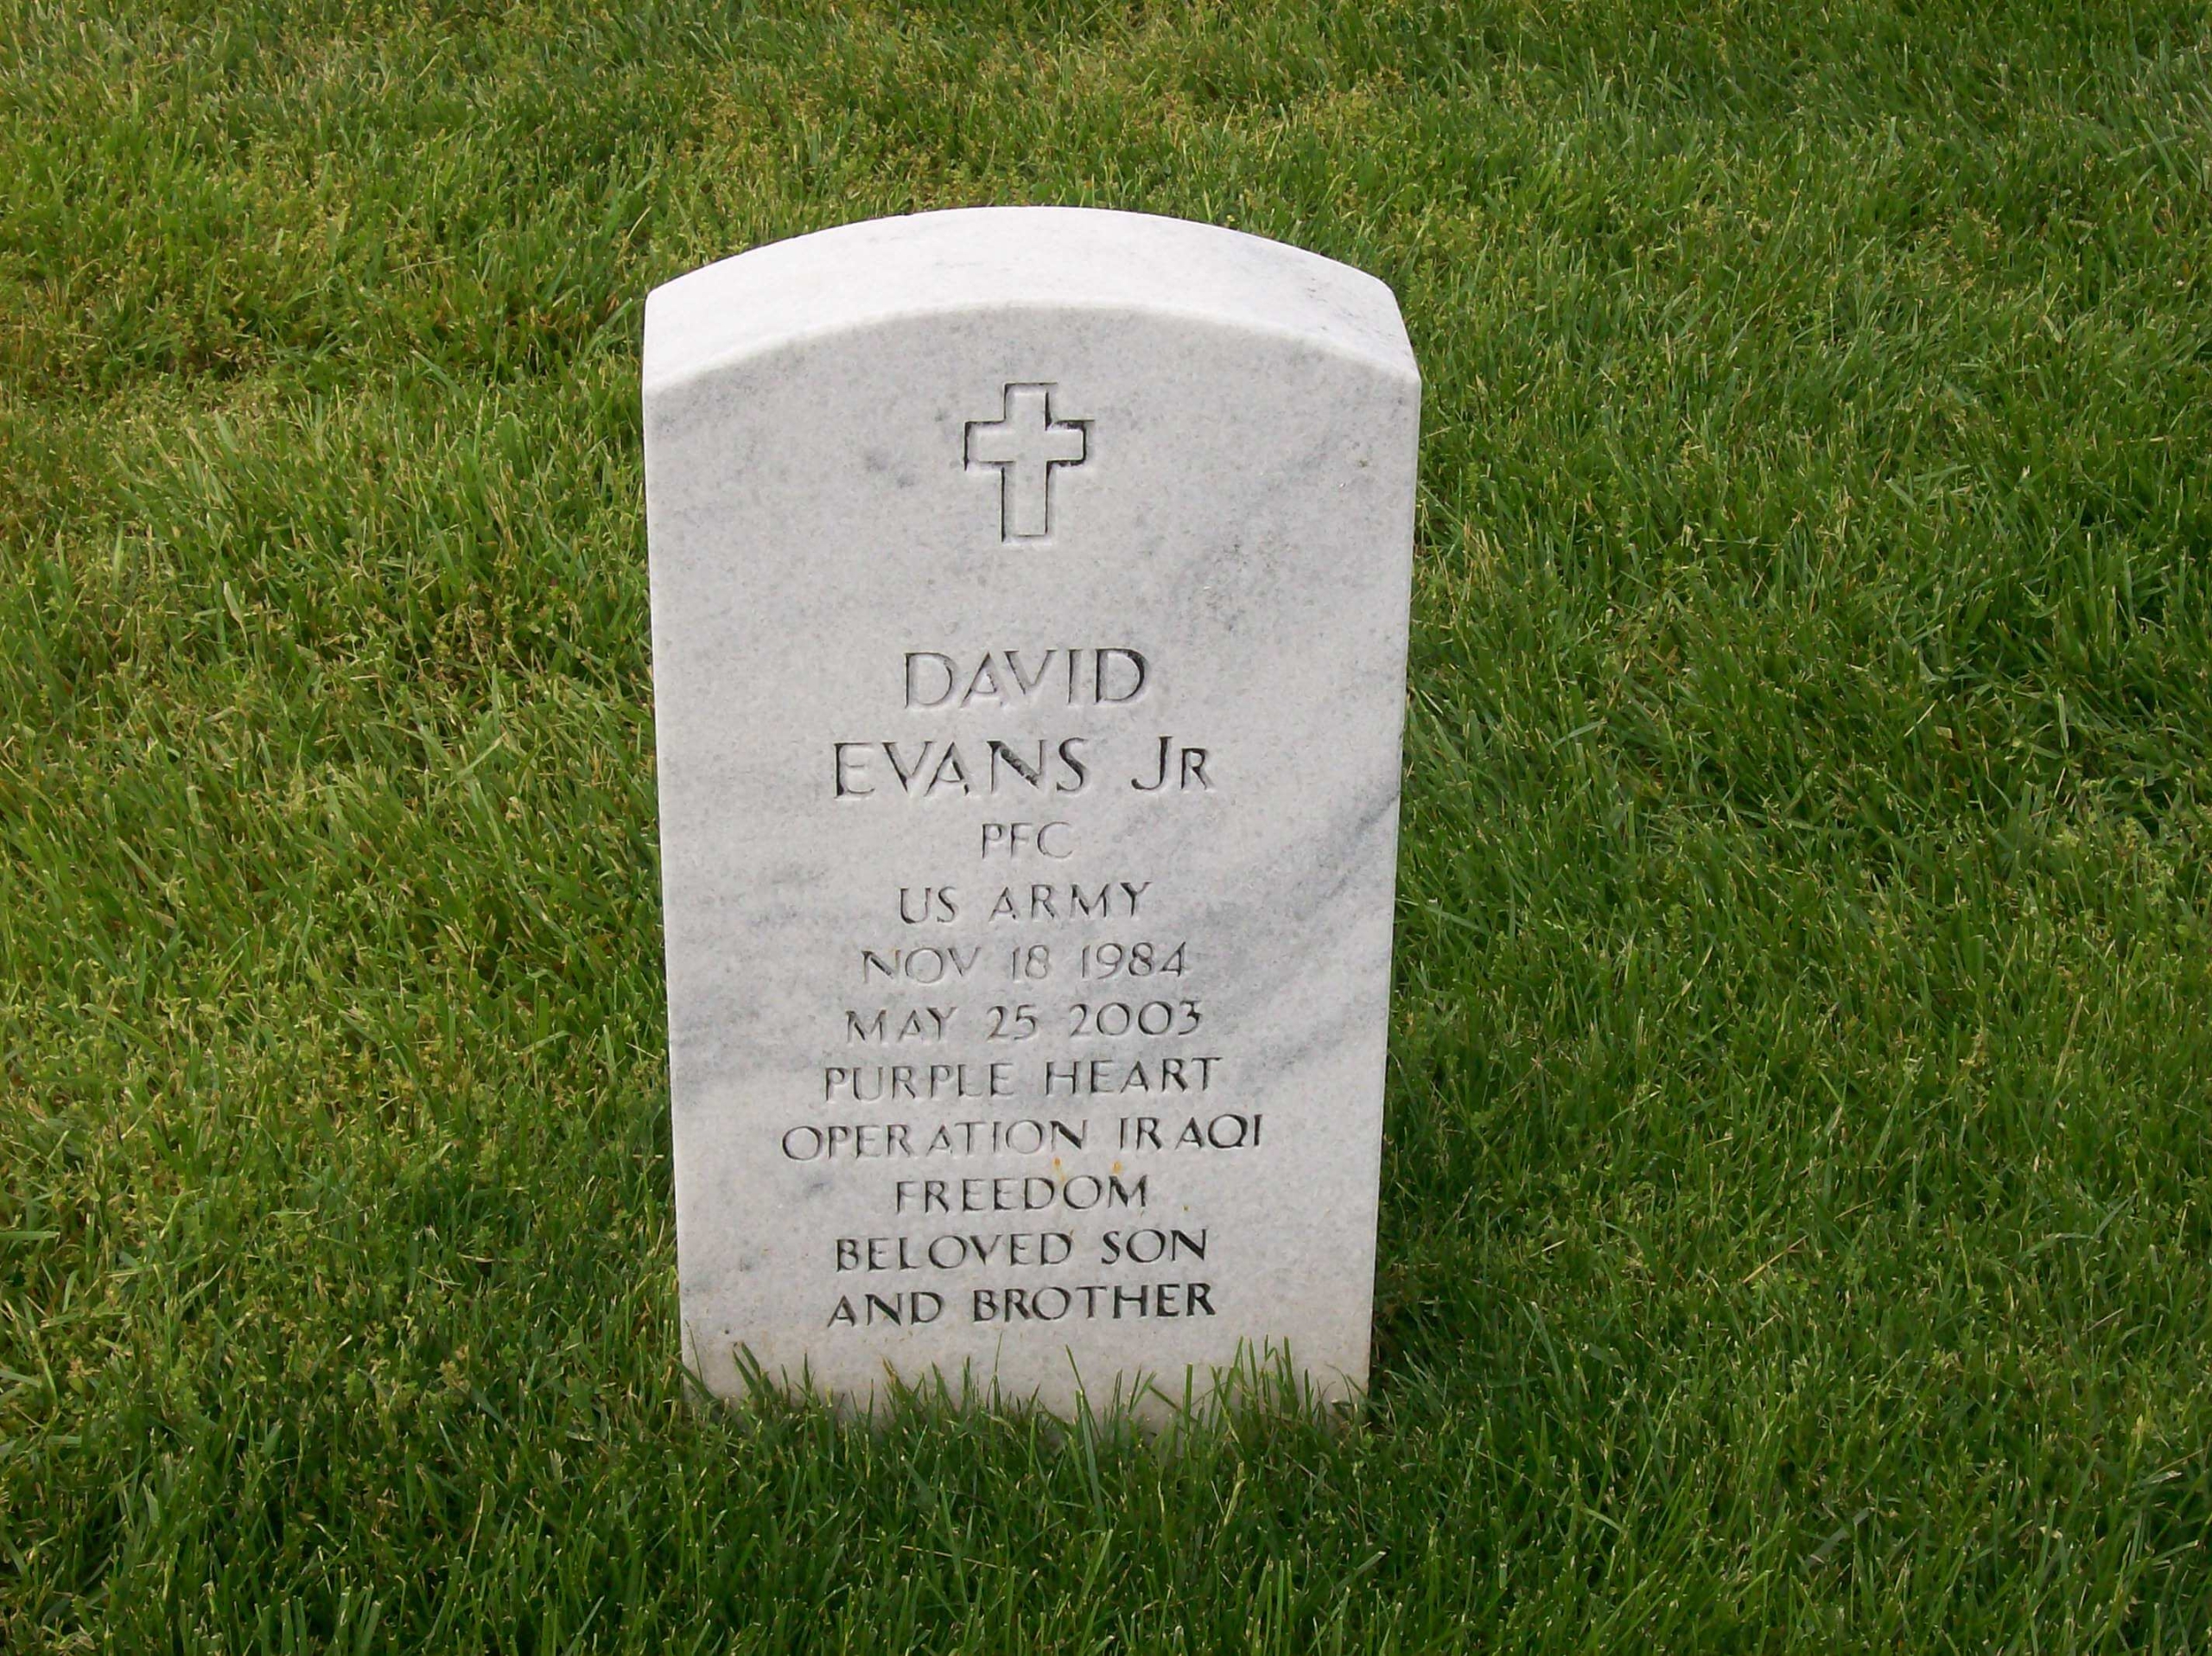 david-evans-jr-gravesite-photo-may-2008-001